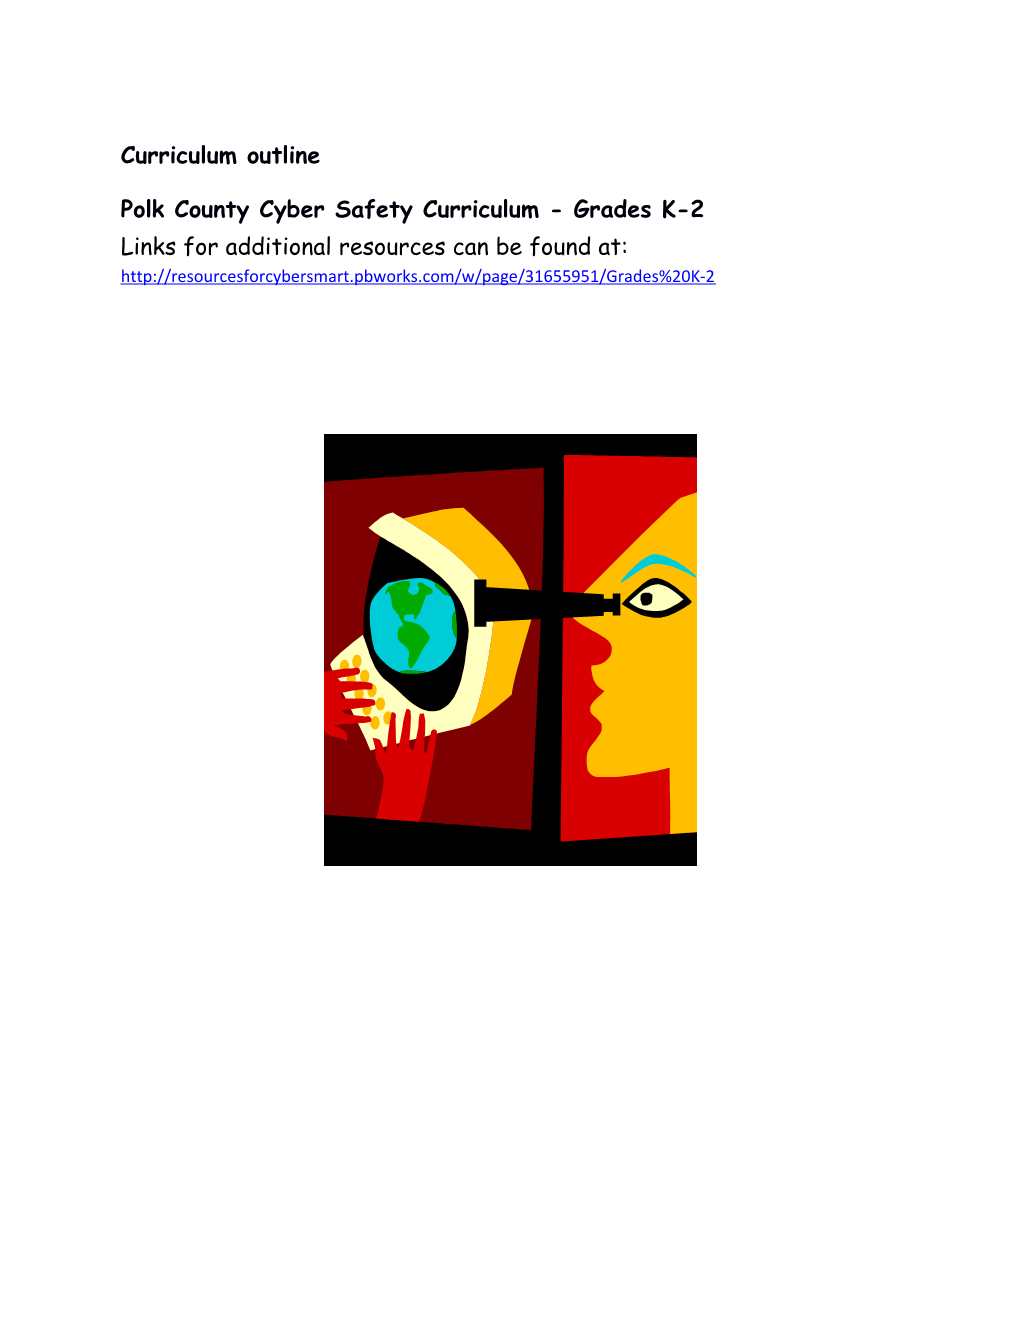 Polk County Cyber Safety Curriculum - Grades K-2